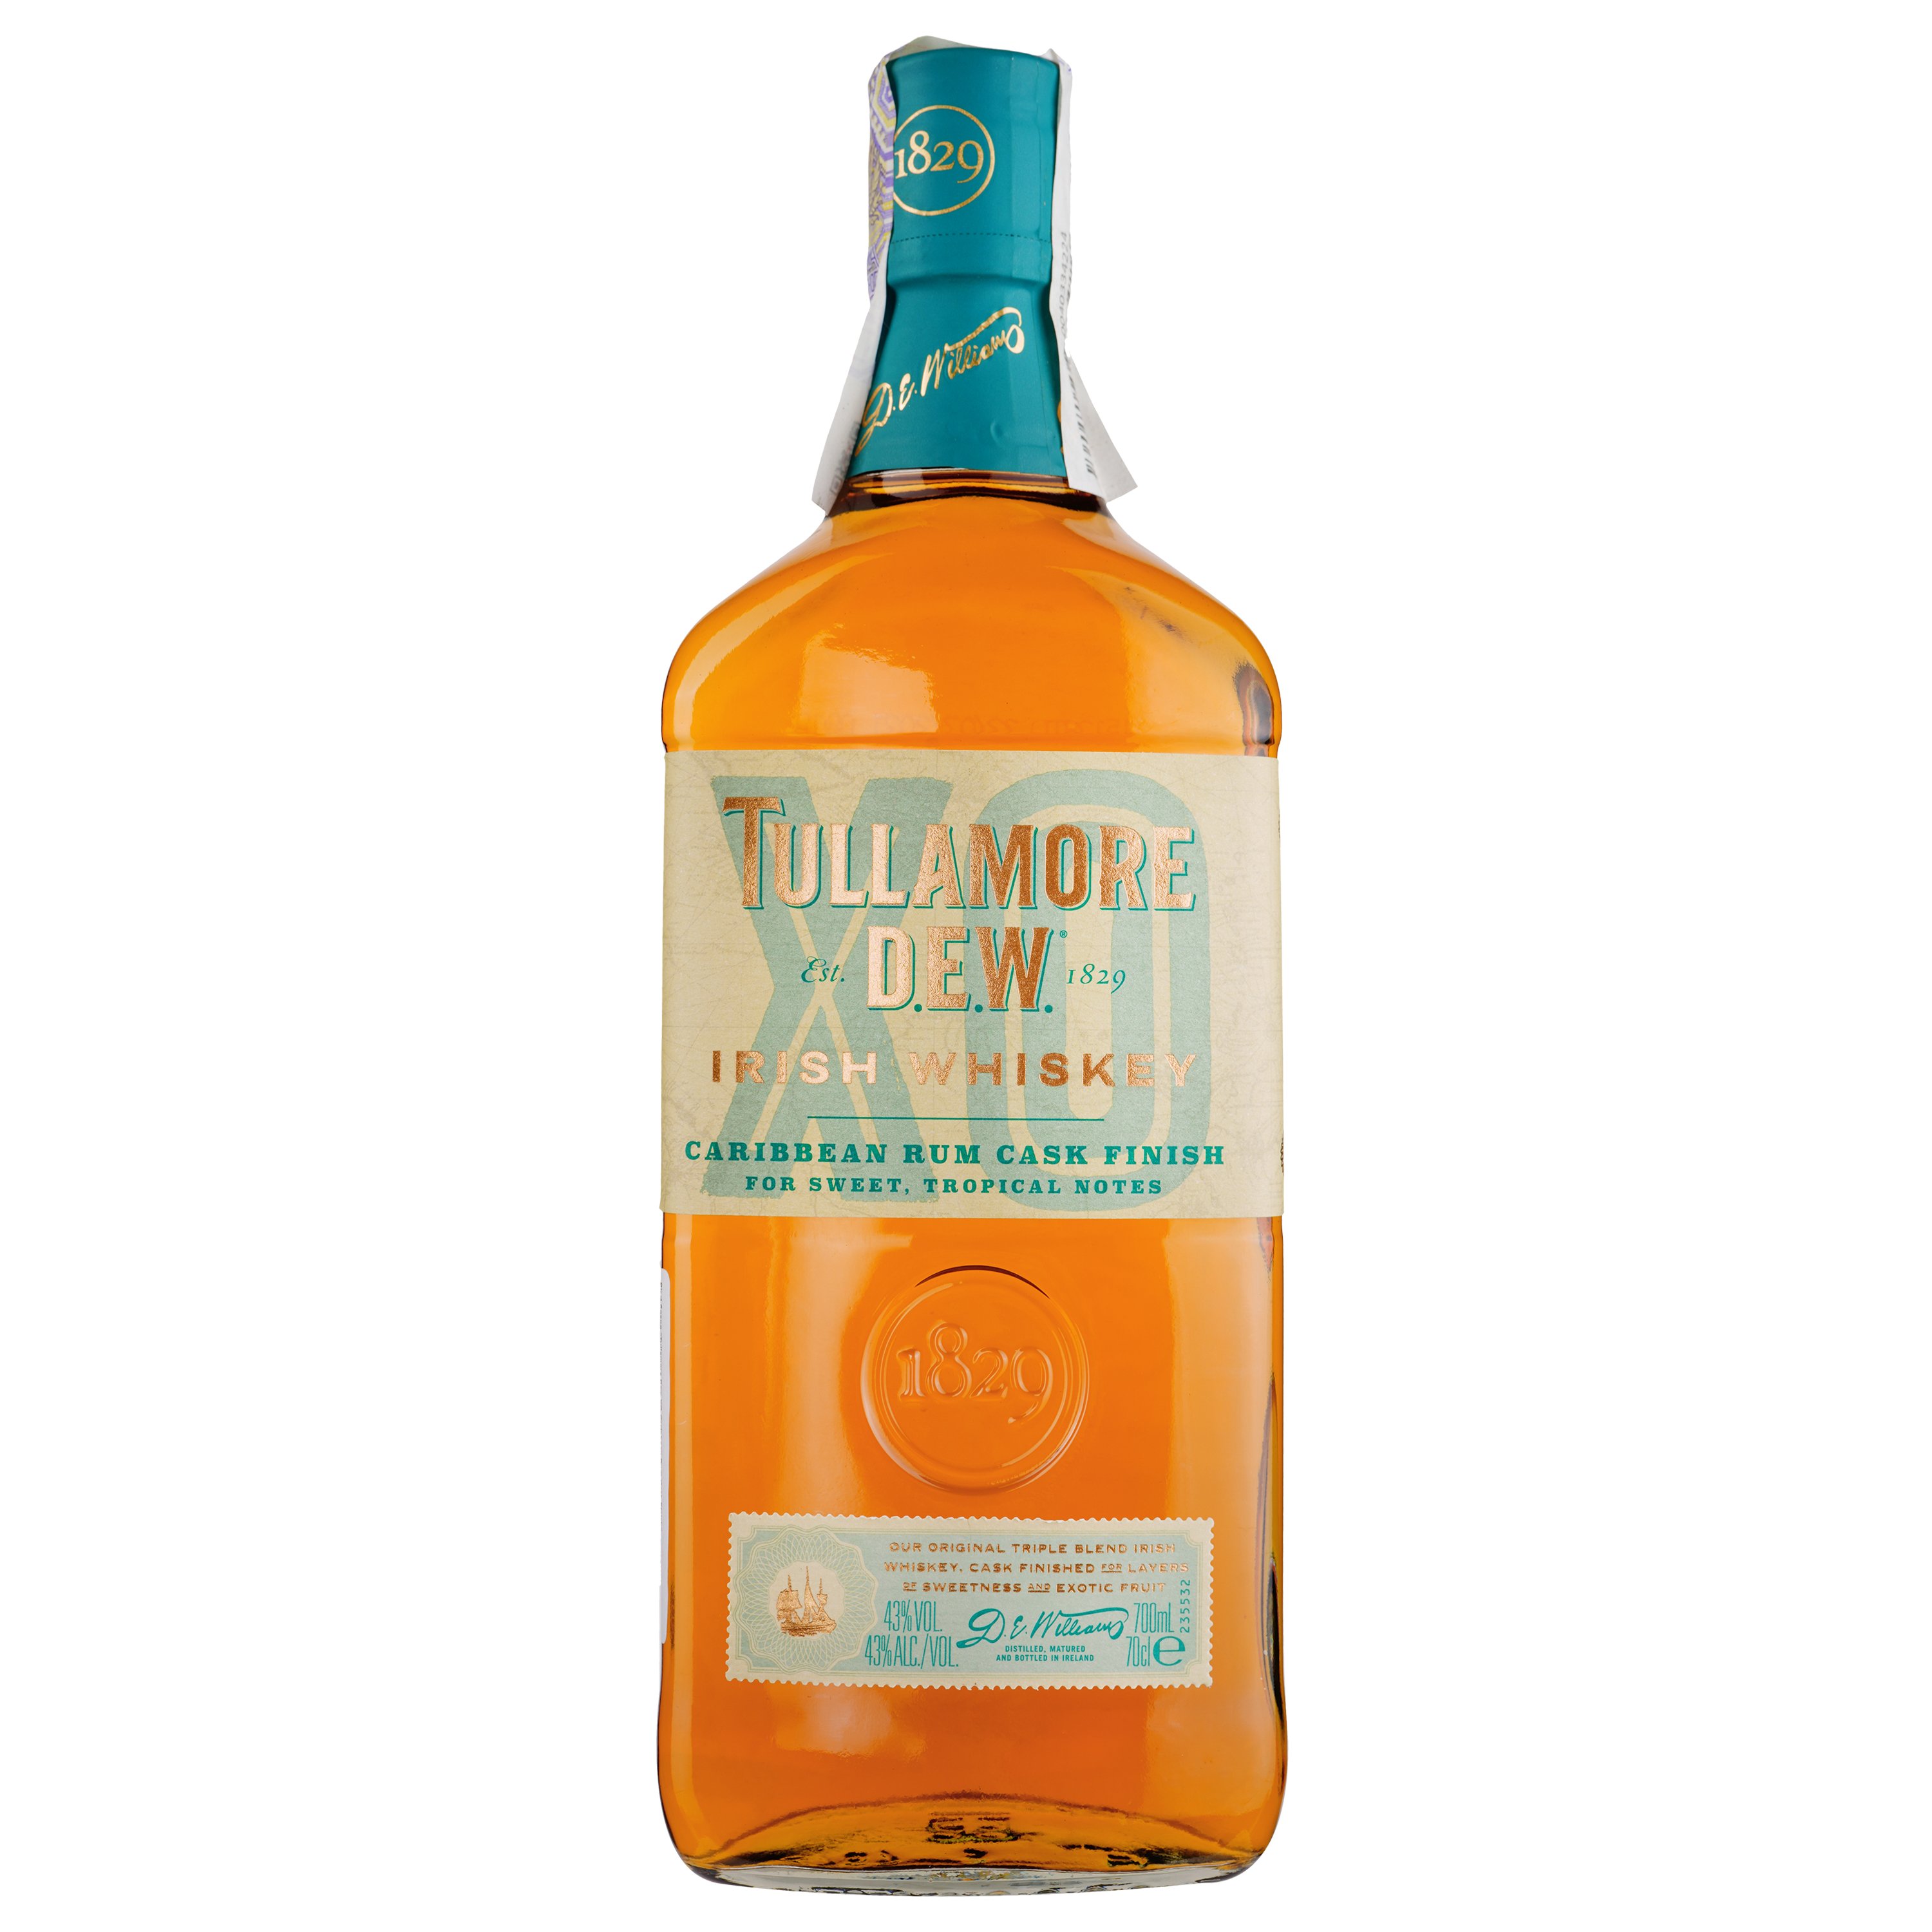 Віскі Tullamore Dew Irish Whiskey Caribbean Rum Cask Finish, 43%, 0,7 л - фото 1